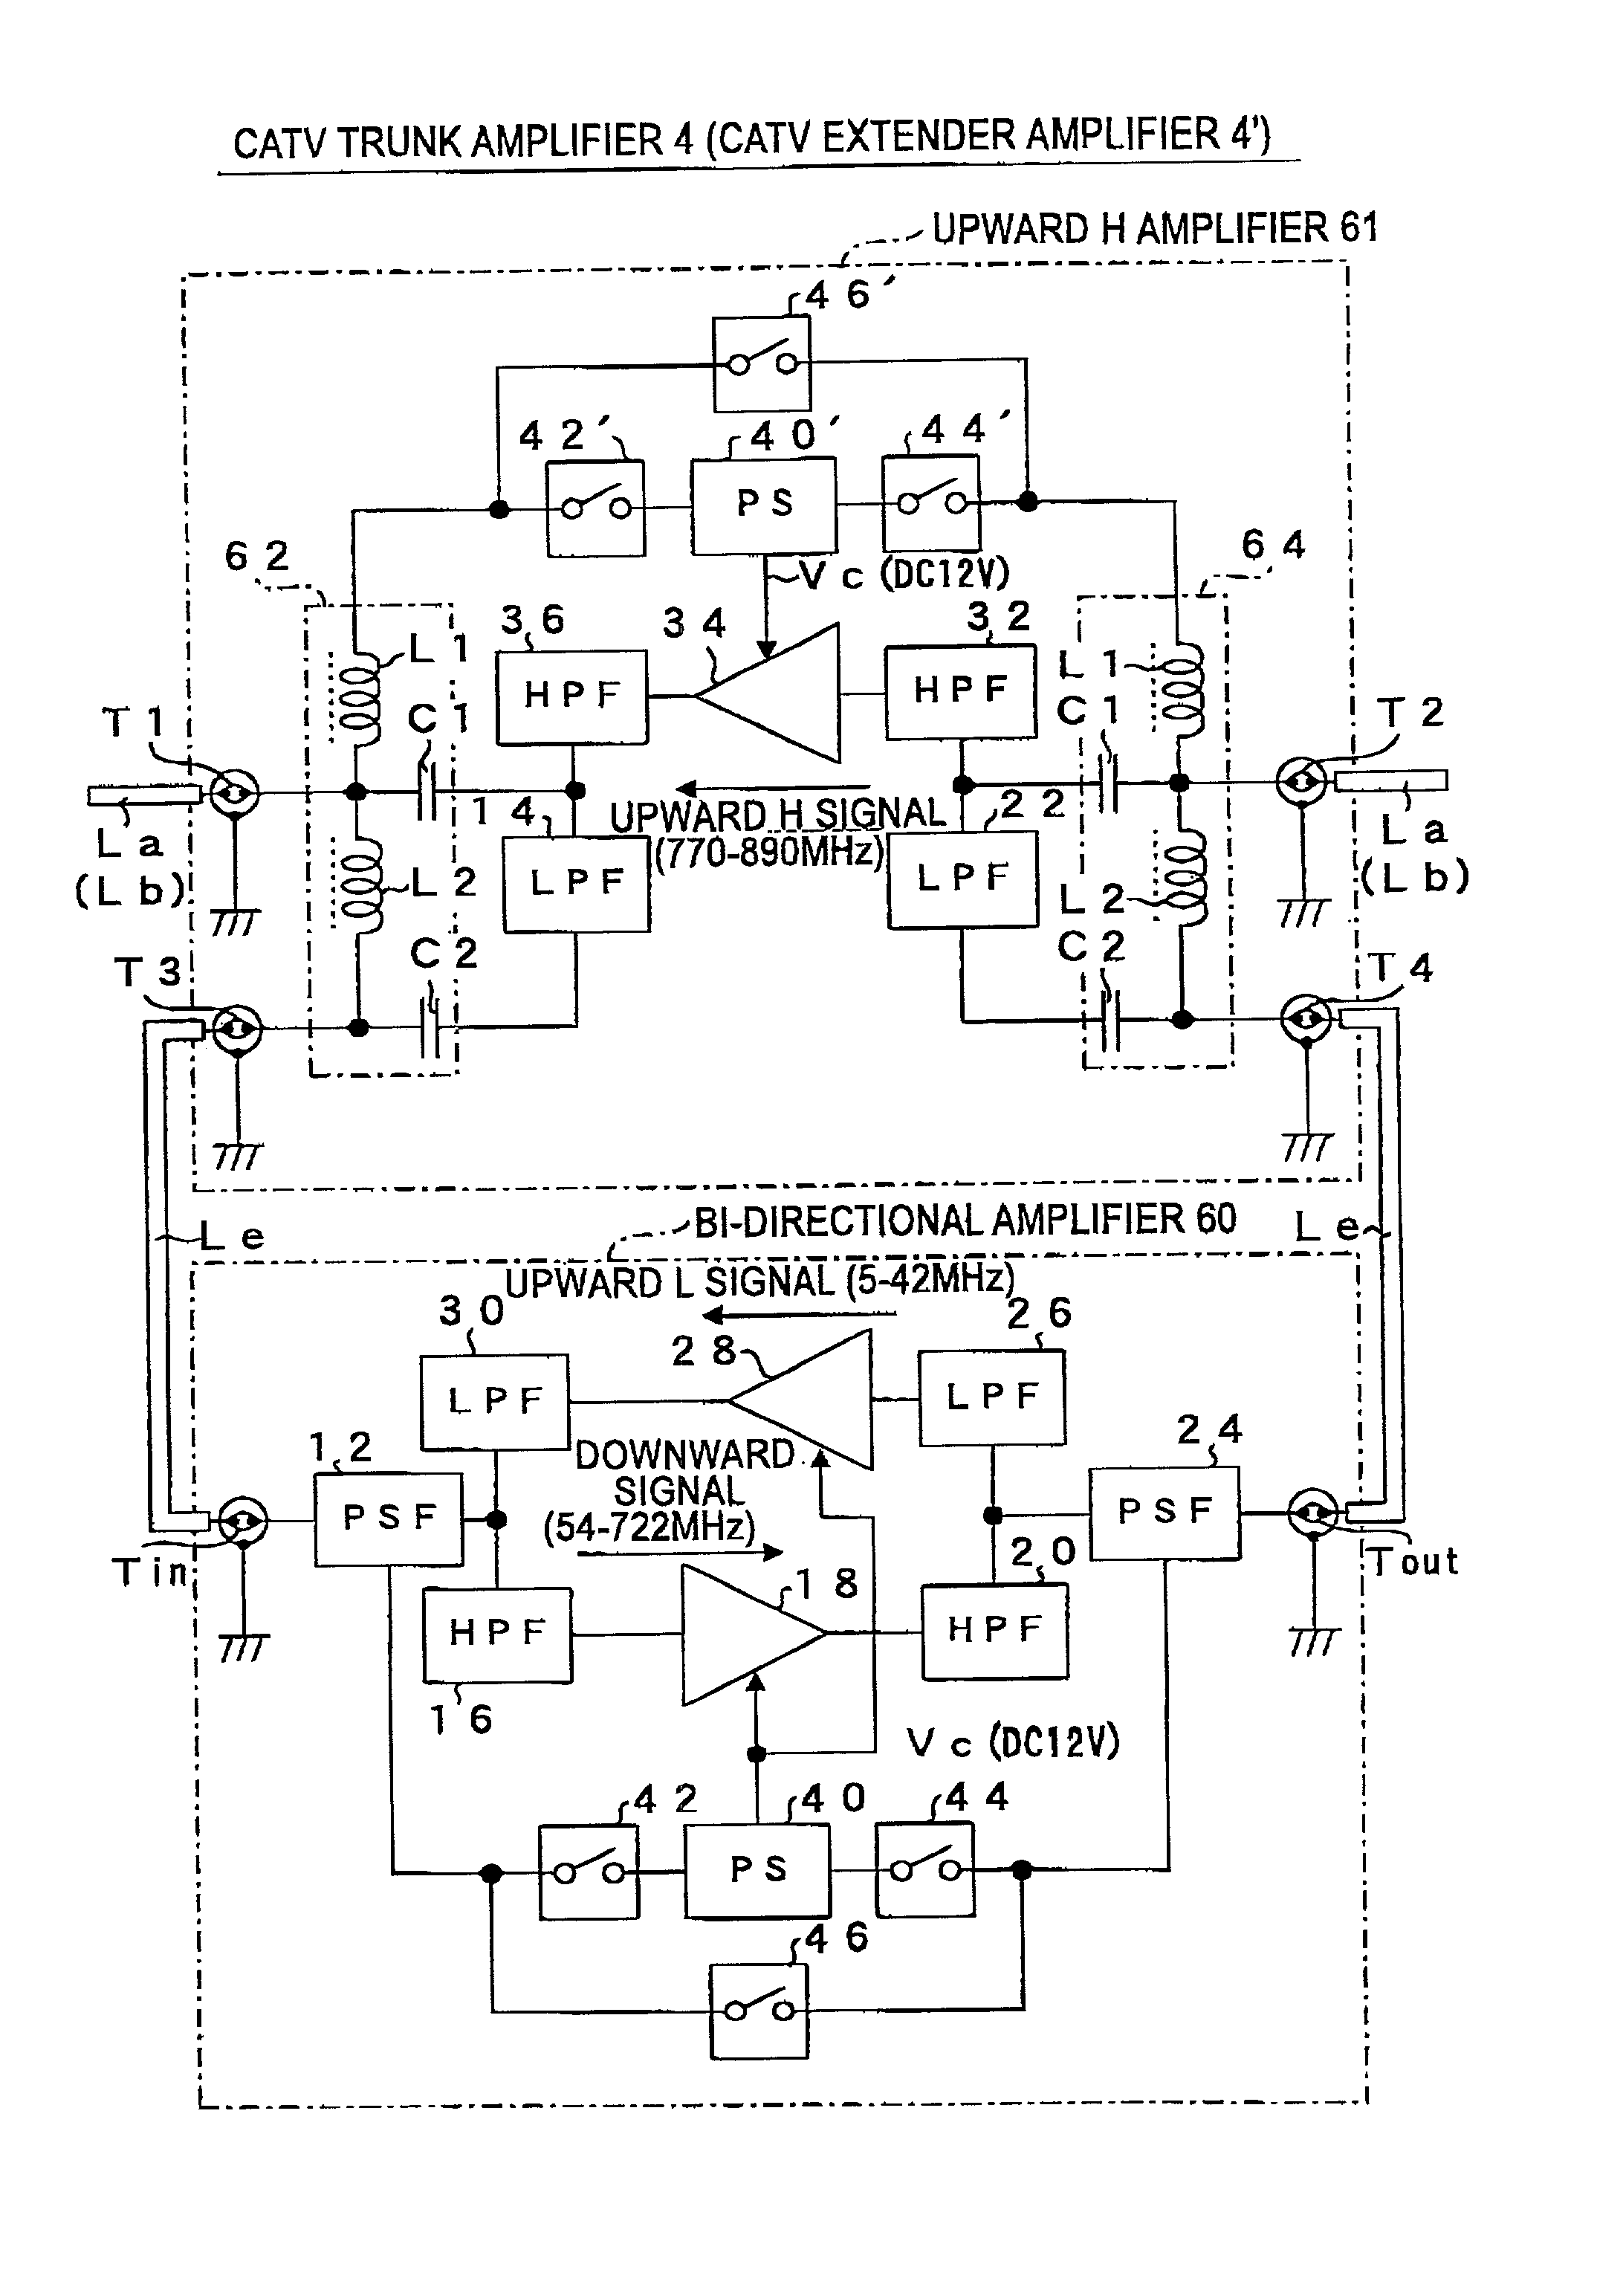 CATV trunk amplifier, upward signal amplifier, and bi-directional CATV system